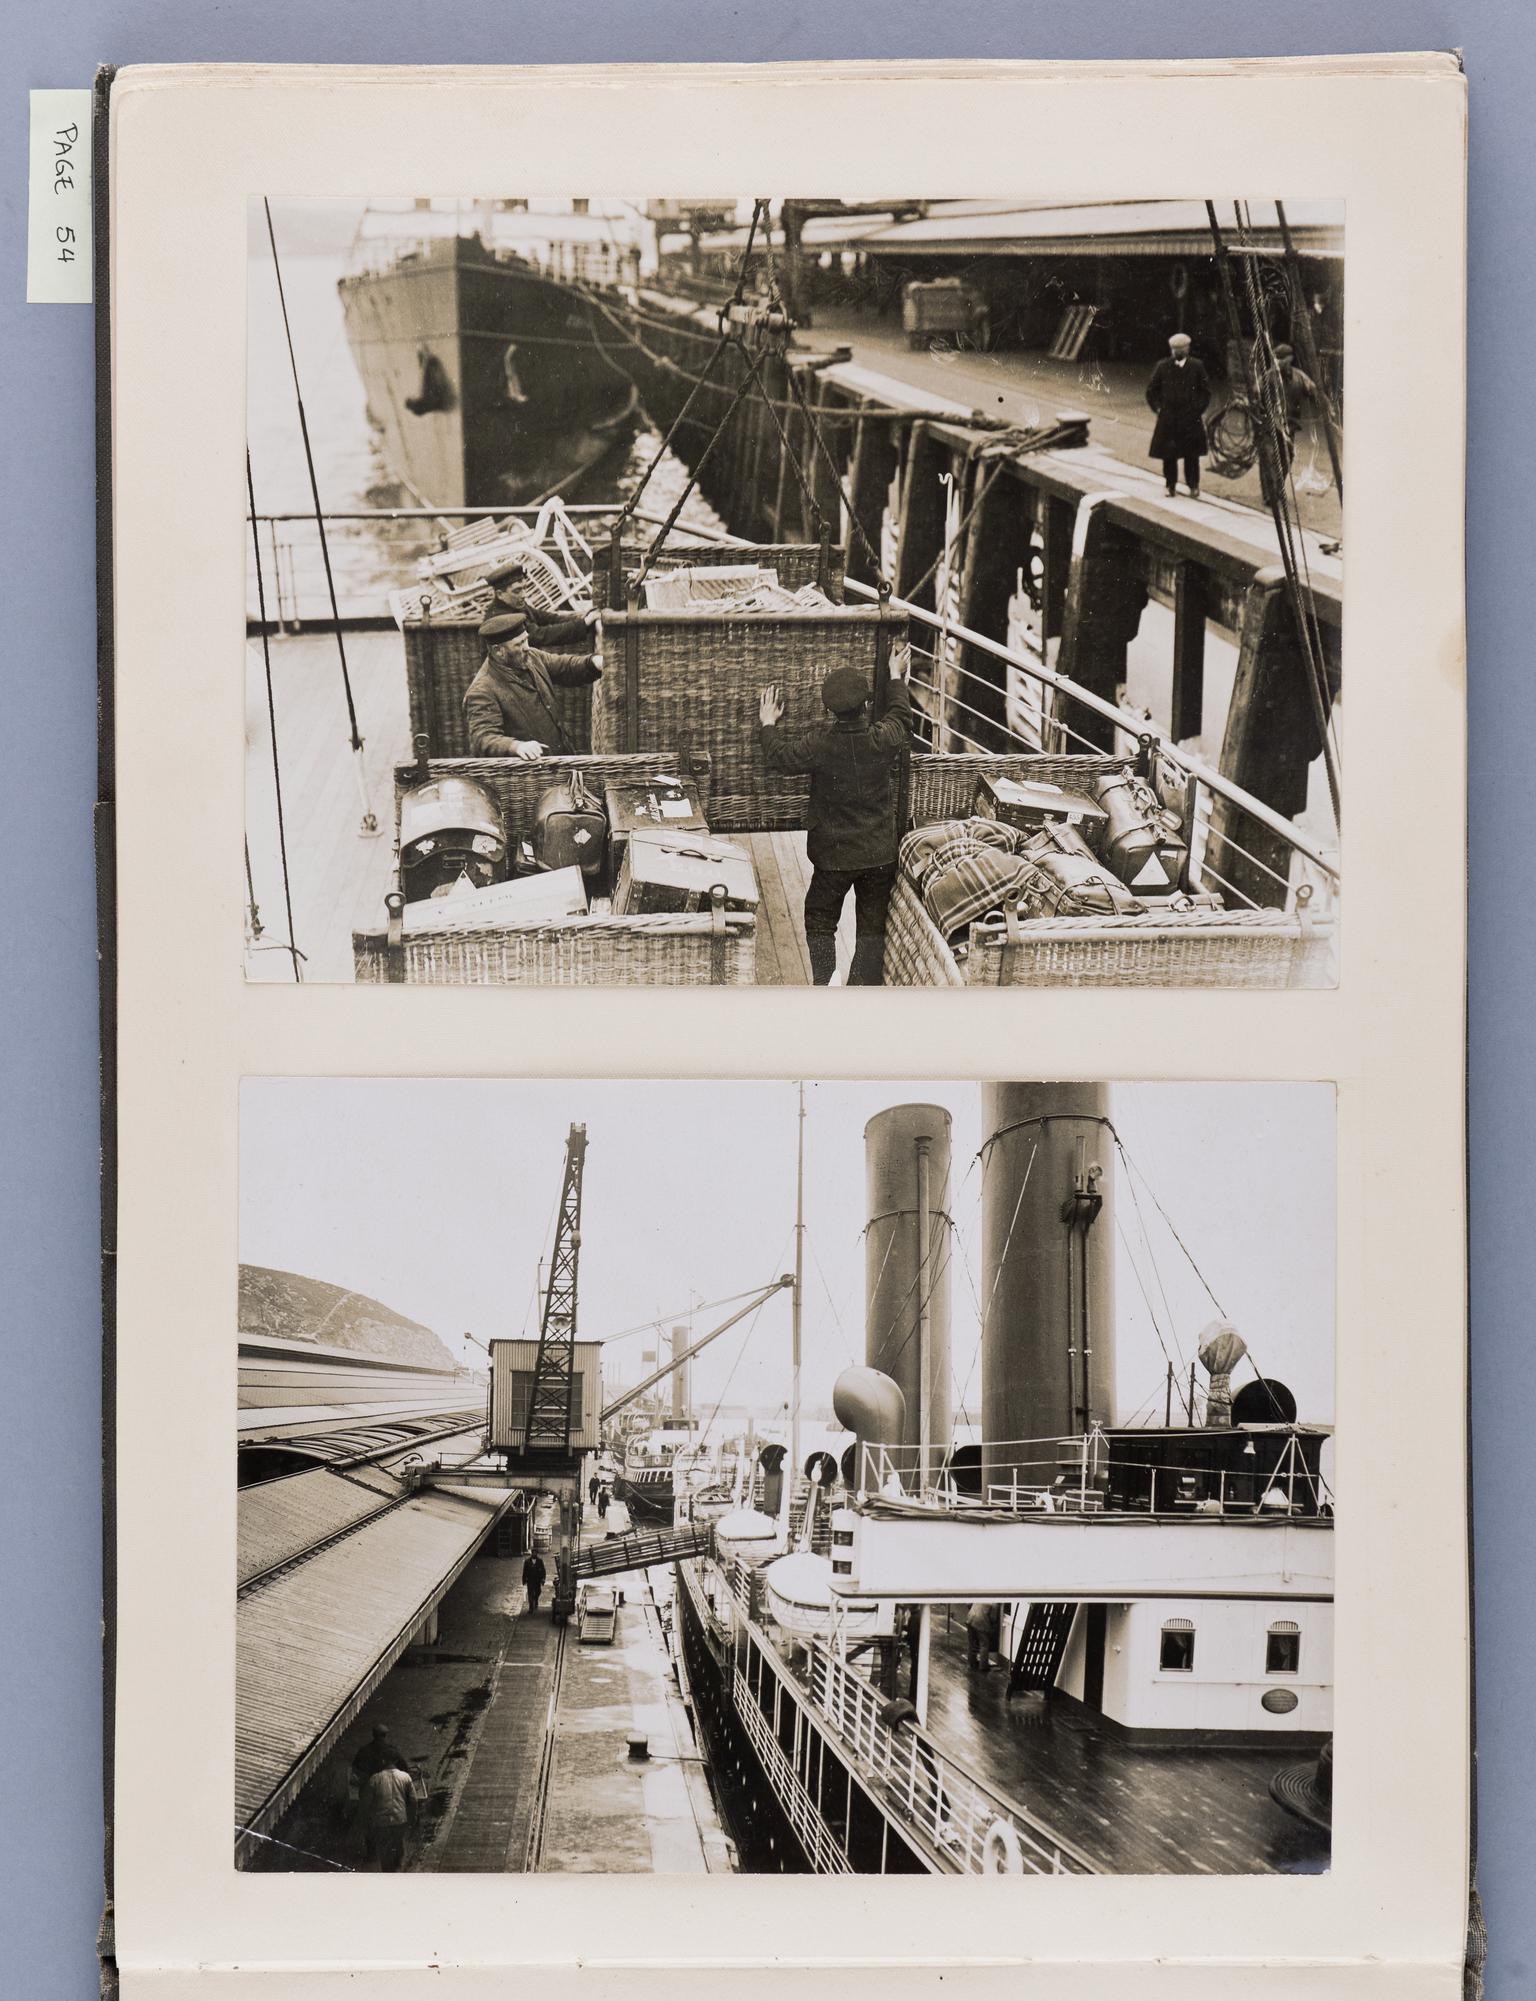 Cunard Line ships at Fishguard 1908-9, photograph album